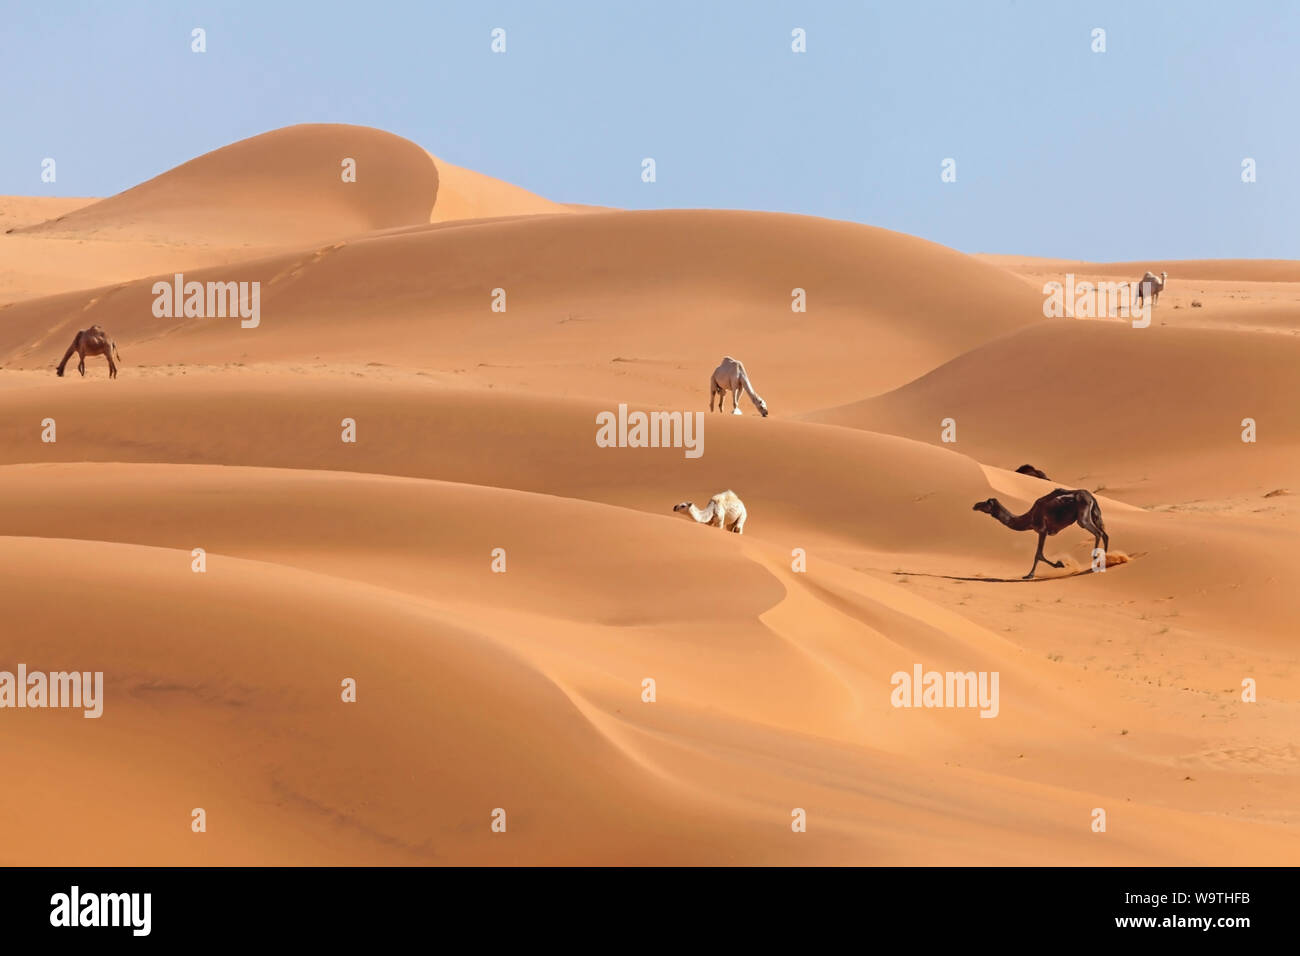 Fünf Kamele weiden in der Wüste, Riad, Saudi-Arabien Stockfoto